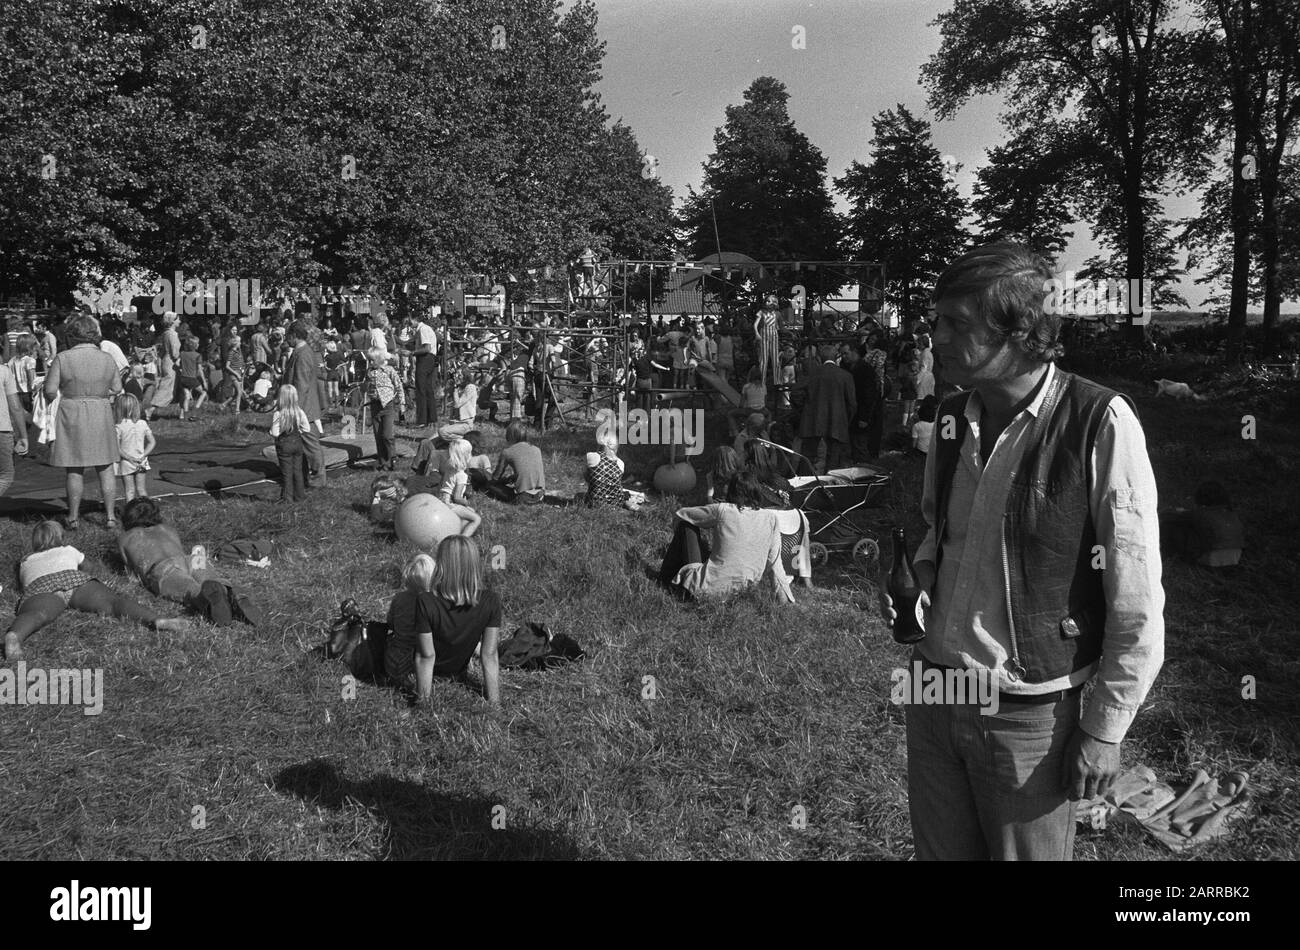 Ruigoord celebrates feast Date: August 26, 1973 Location: Amsterdam, Noord-Holland, Ruigoord Keywords: Festivals Stock Photo